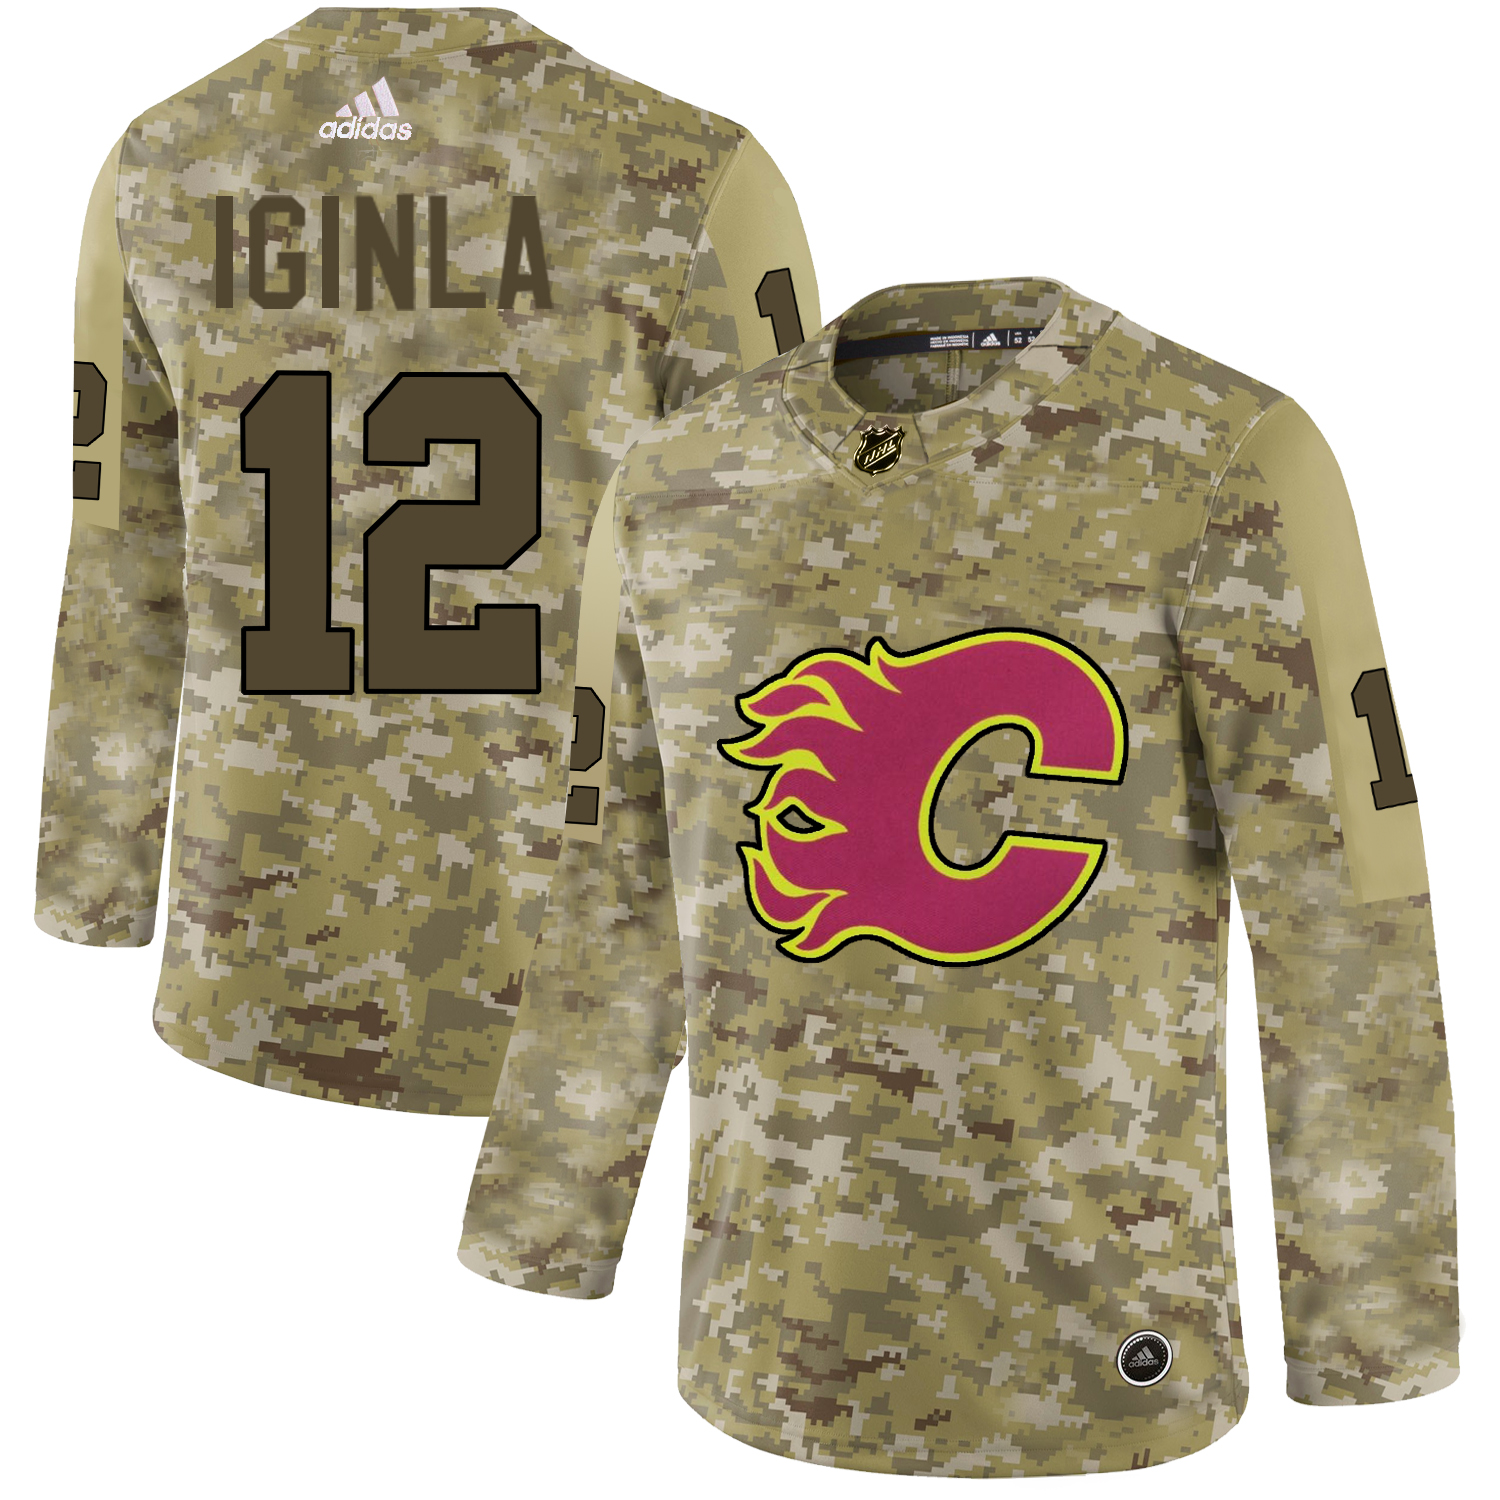 Adidas Flames #12 Jarome Iginla Camo Authentic Stitched NHL Jersey